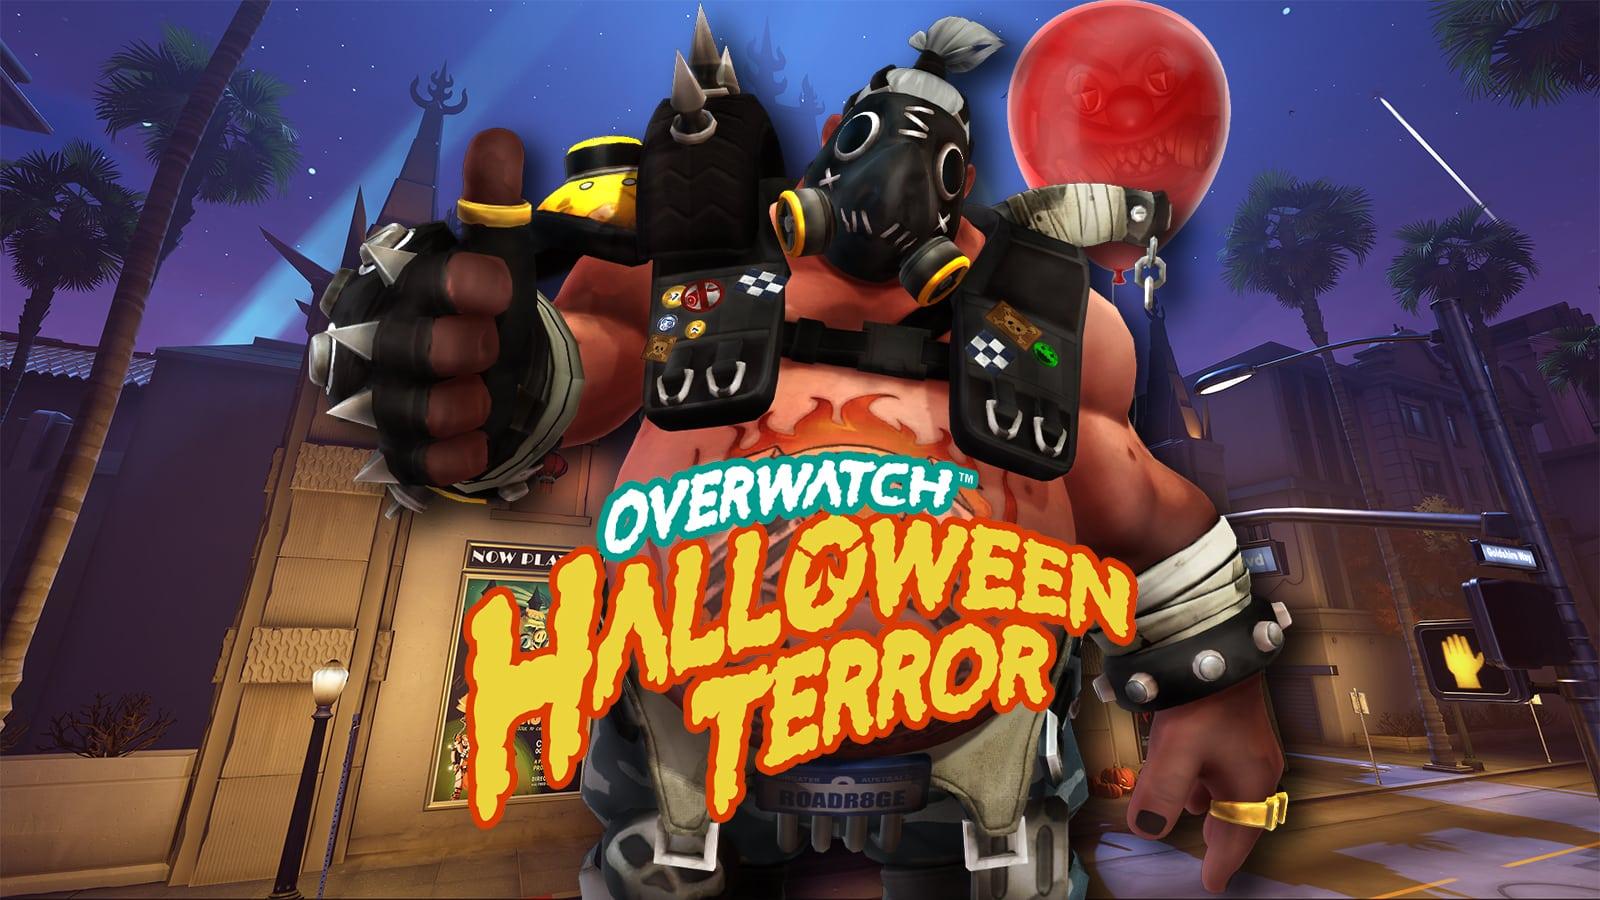 Roadhog Halloween Terror 2021 Overwatch skin